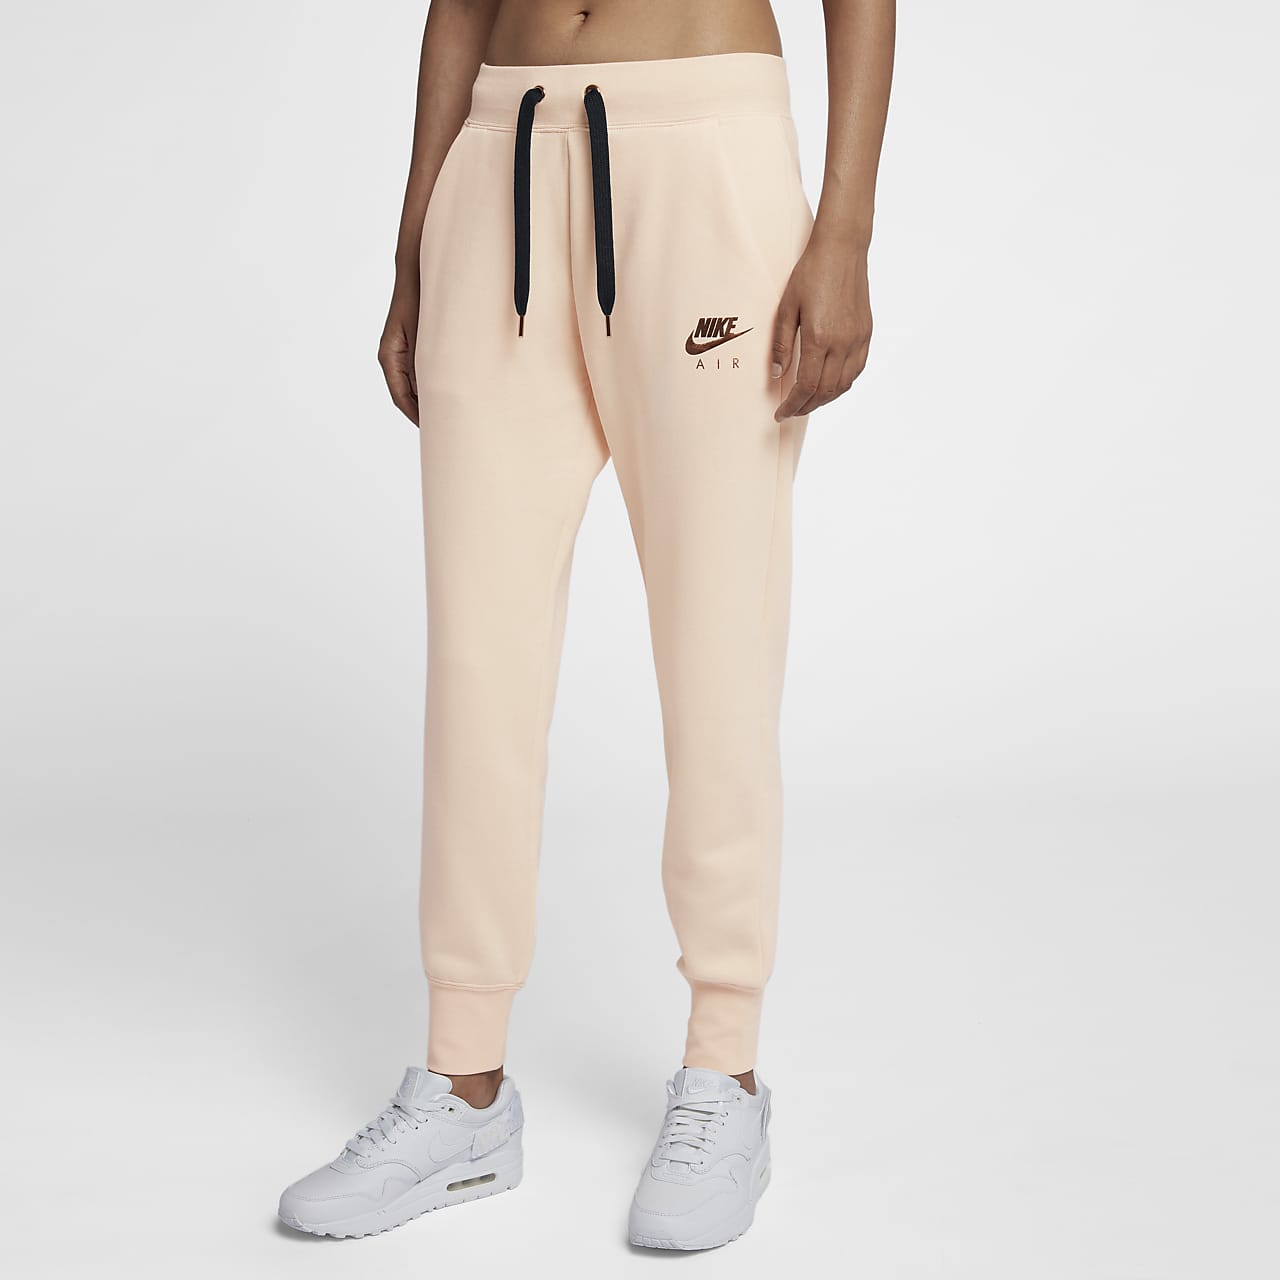 Nike Trousers for Women